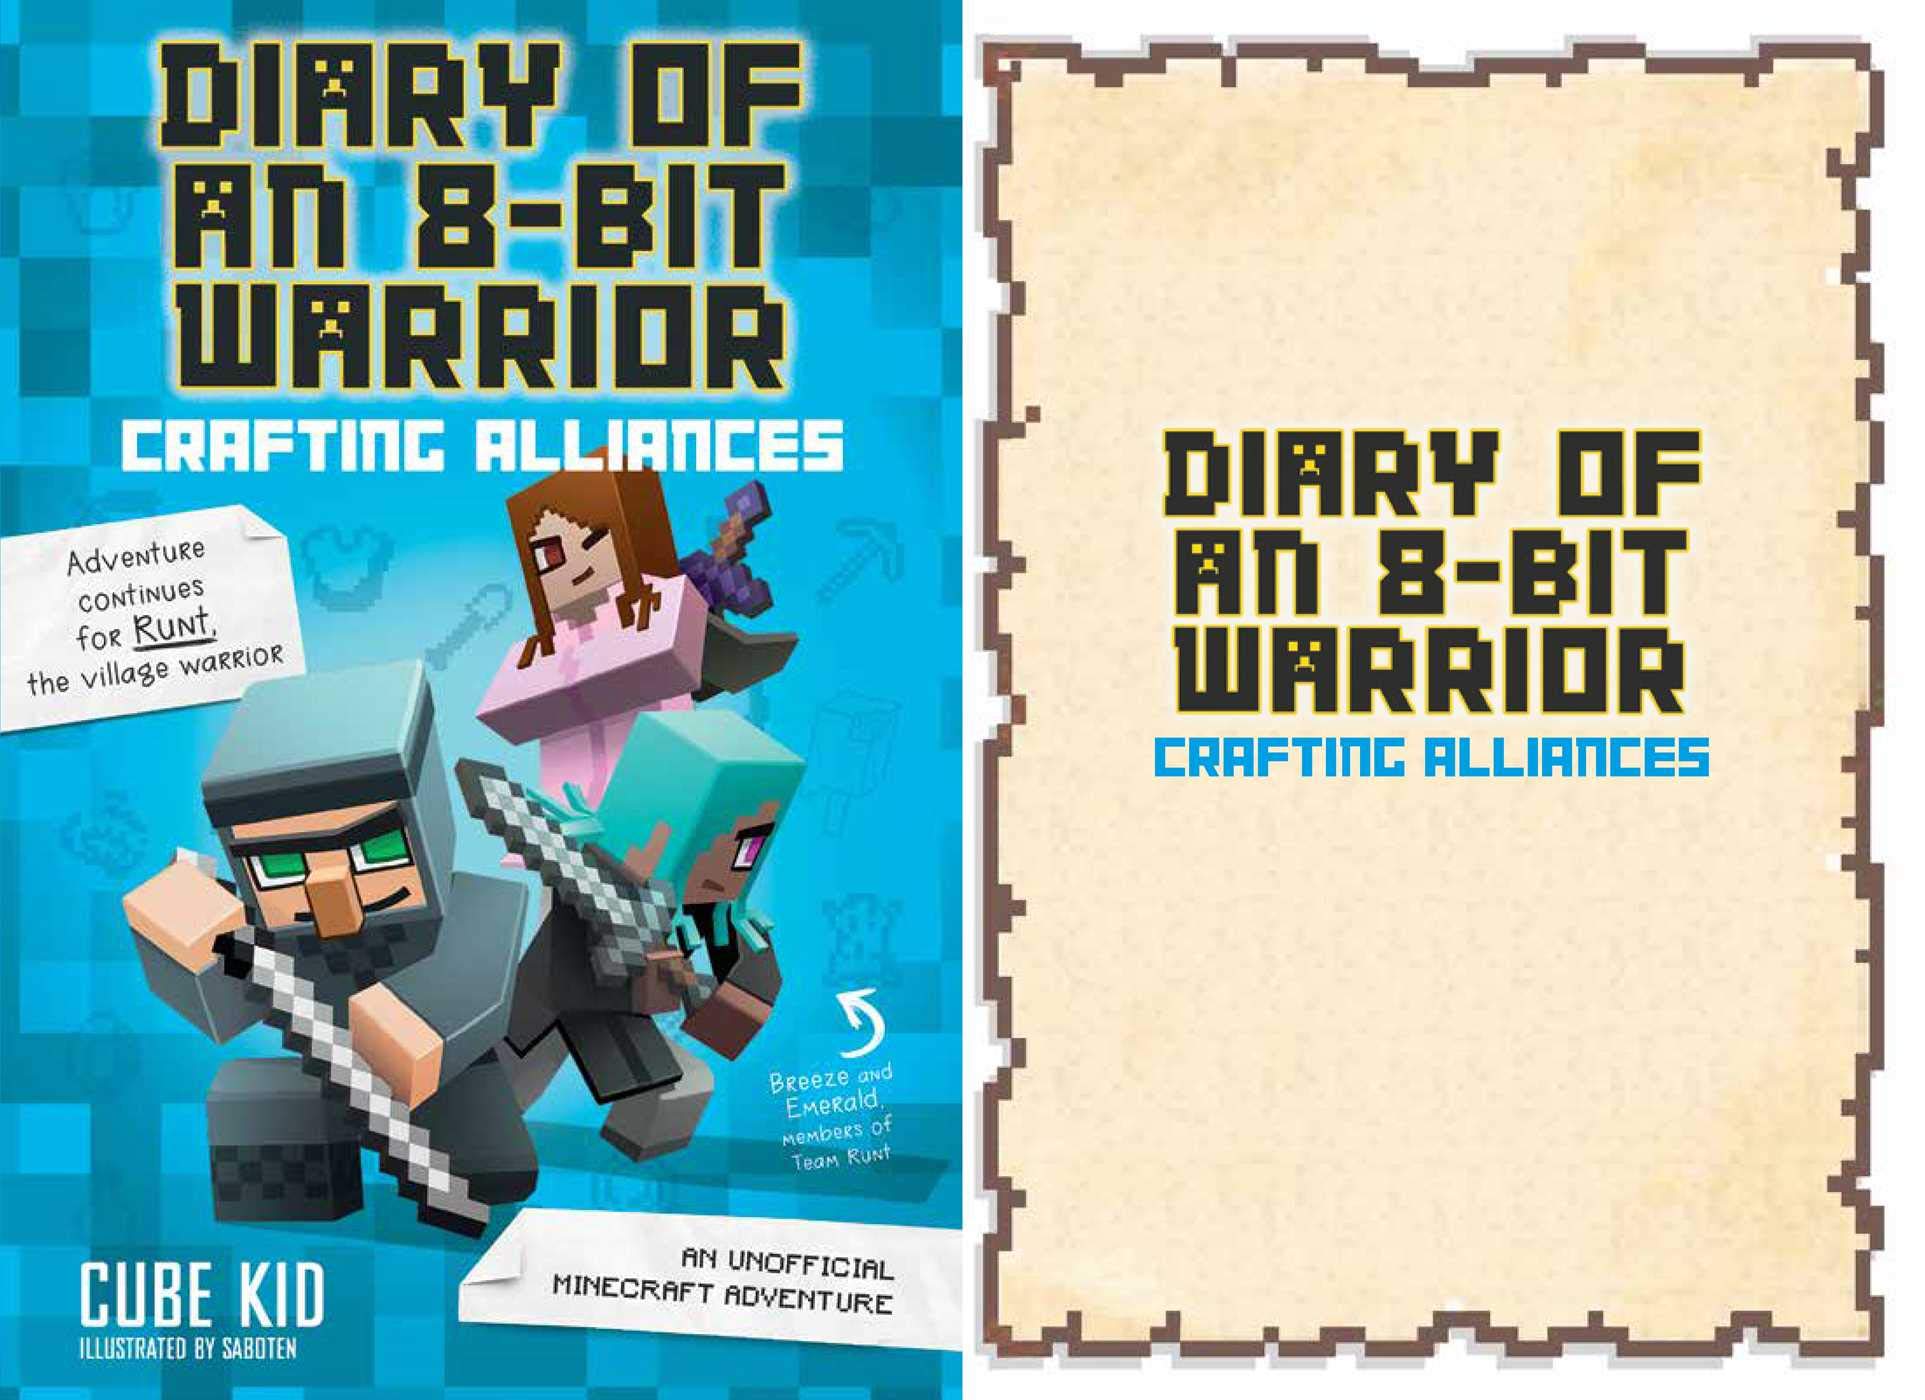 Diary of an 8-Bit Warrior Diamond Box Set